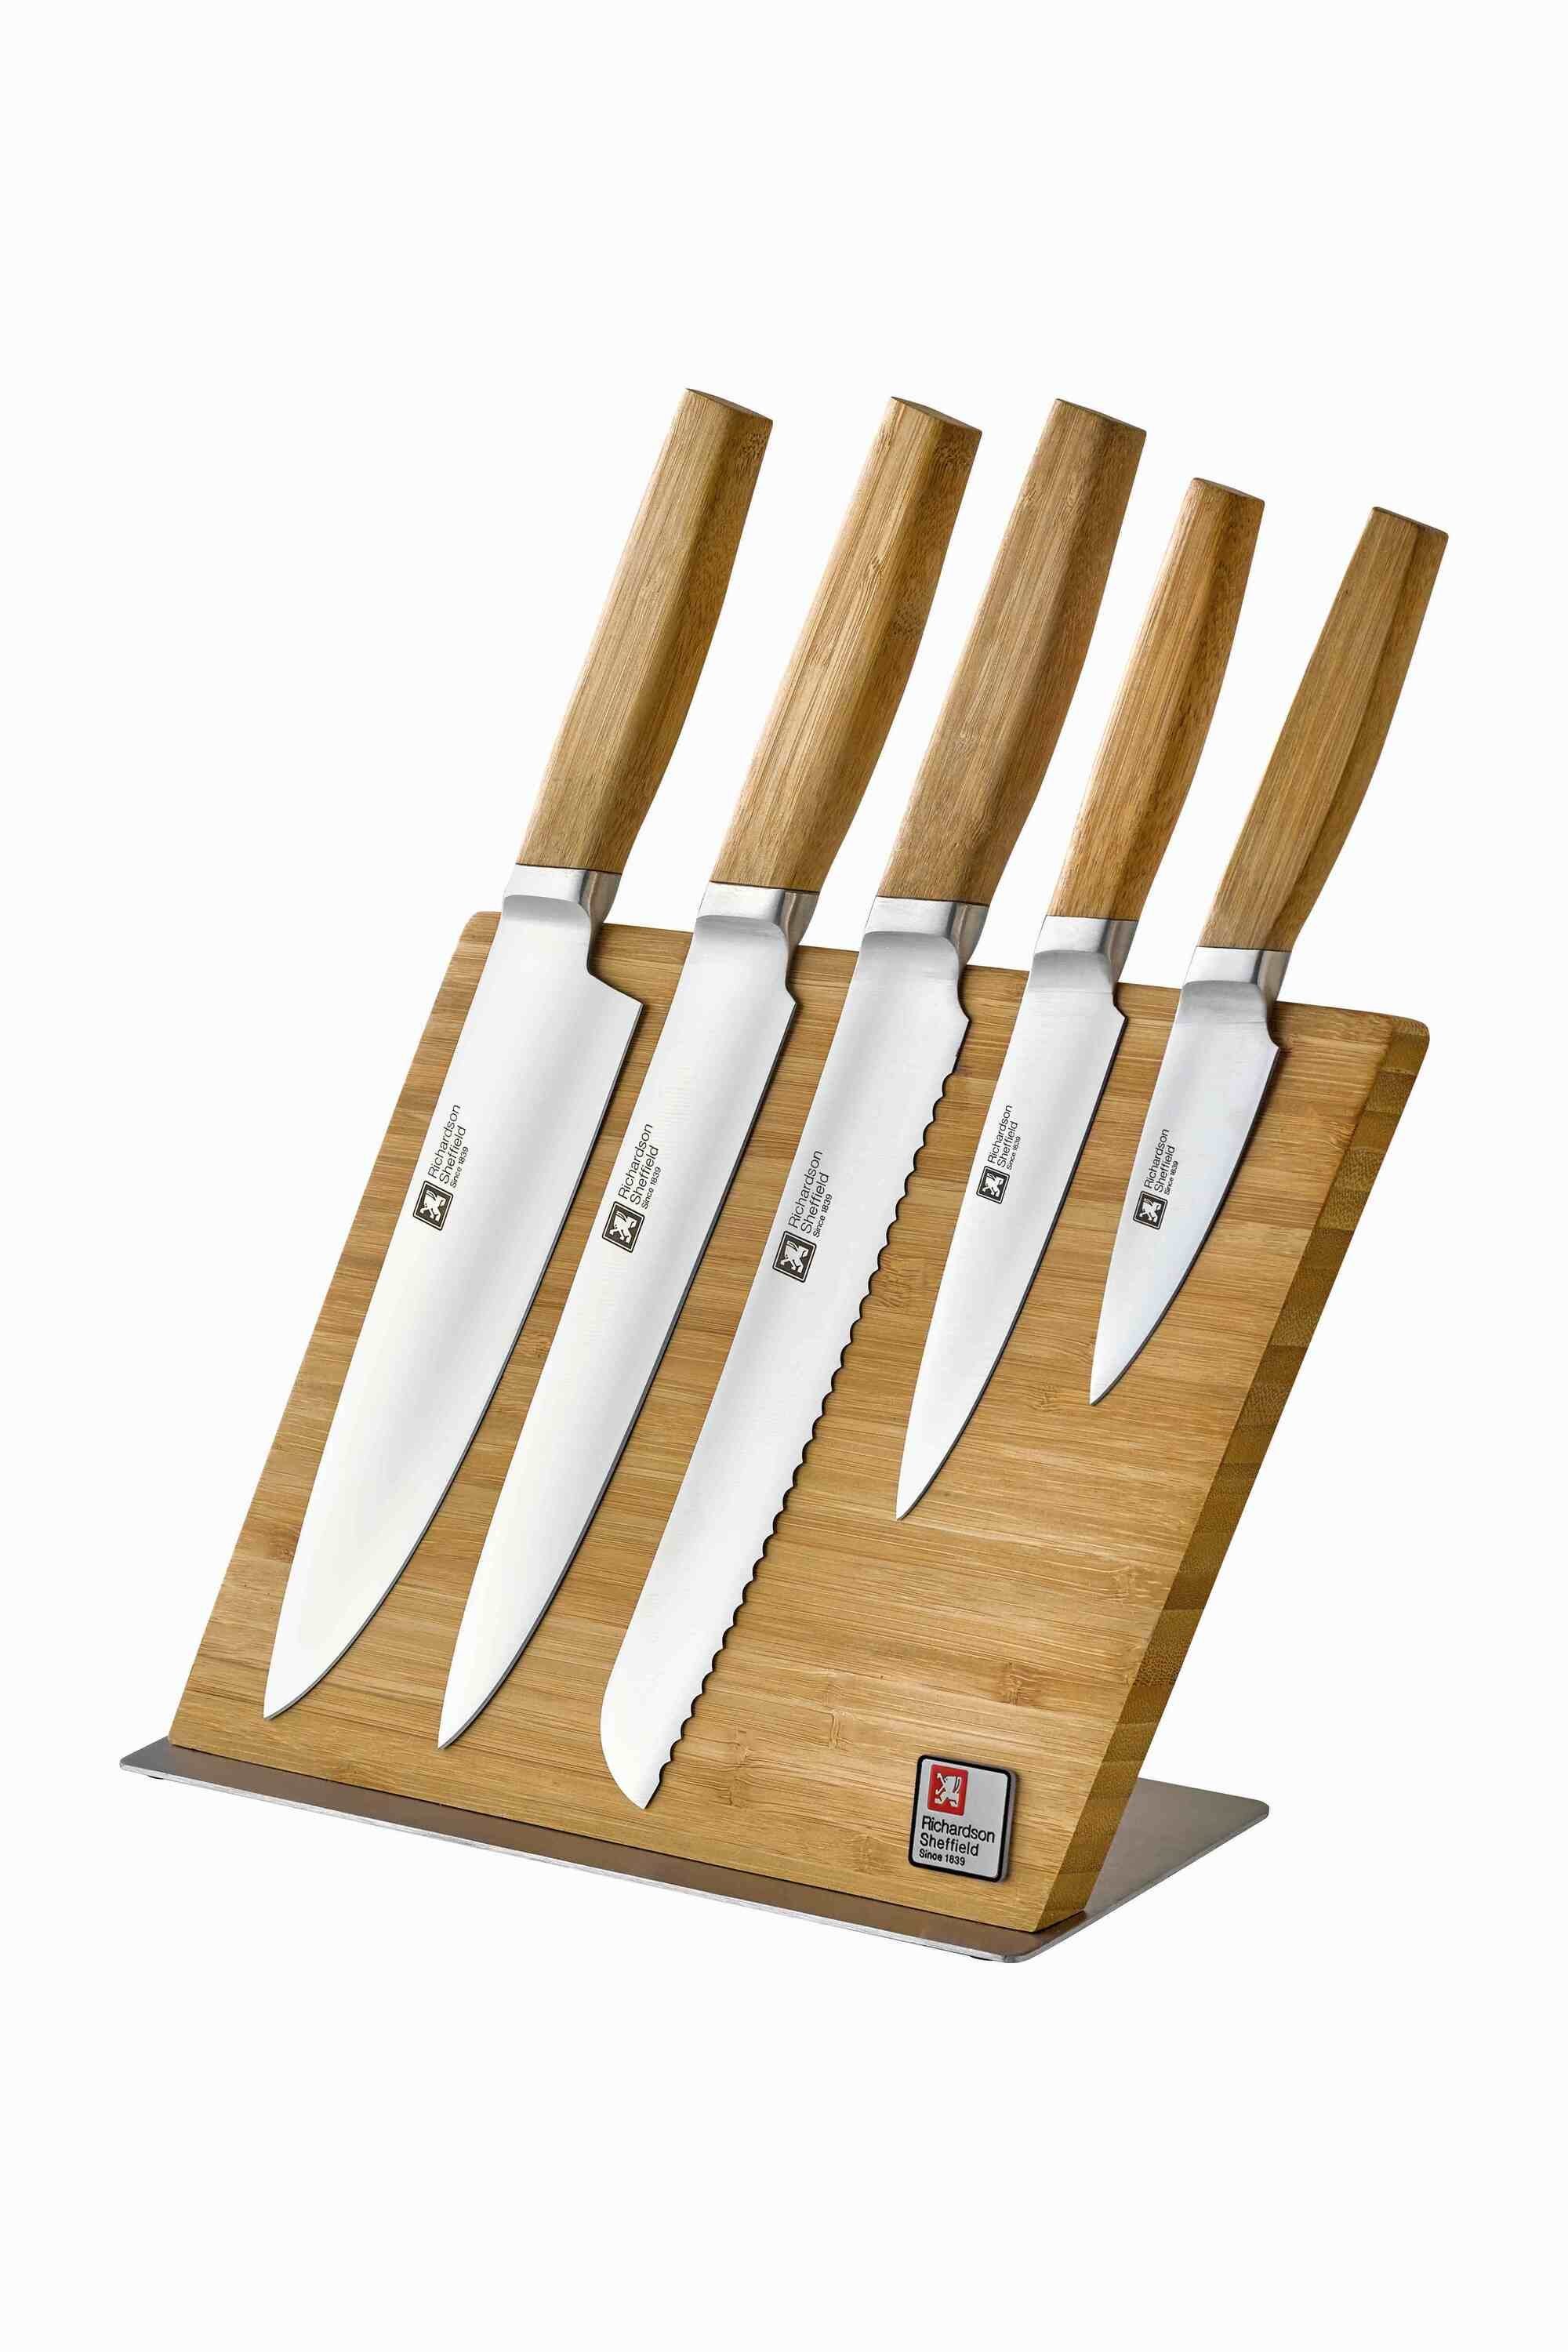 Richardson Sheffield Messerblock NOMAD, magnetisches Holz-Messerbrett, inklusive 5 Messer